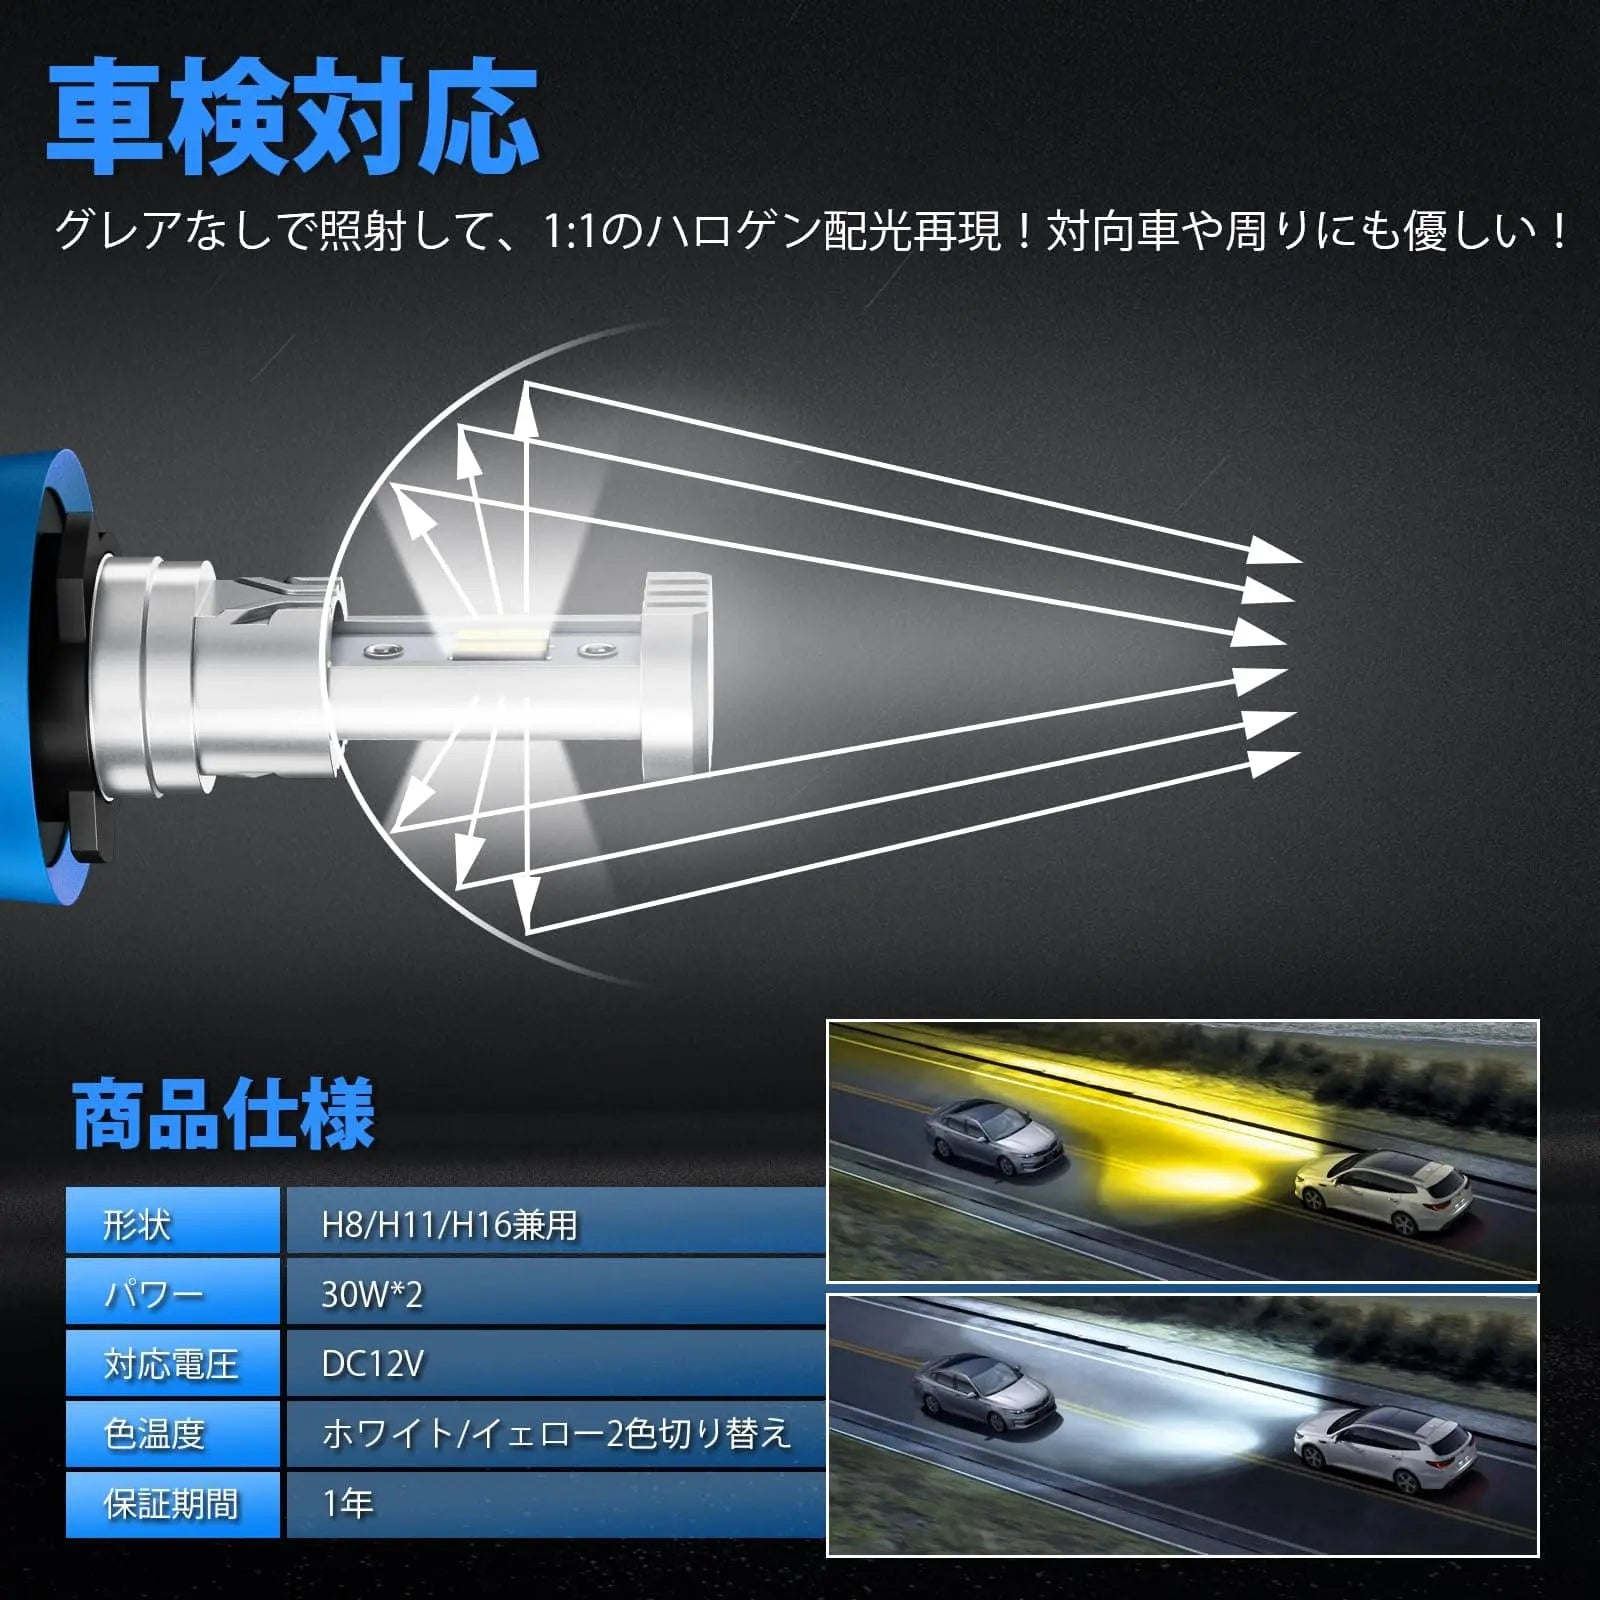 H8 LEDフォグ 2色 爆光 メモリー機能付き 角度調整可能 DC12V車用 12000lm | 汽车照明系统 | LEDフォグランプ | SUPAREE